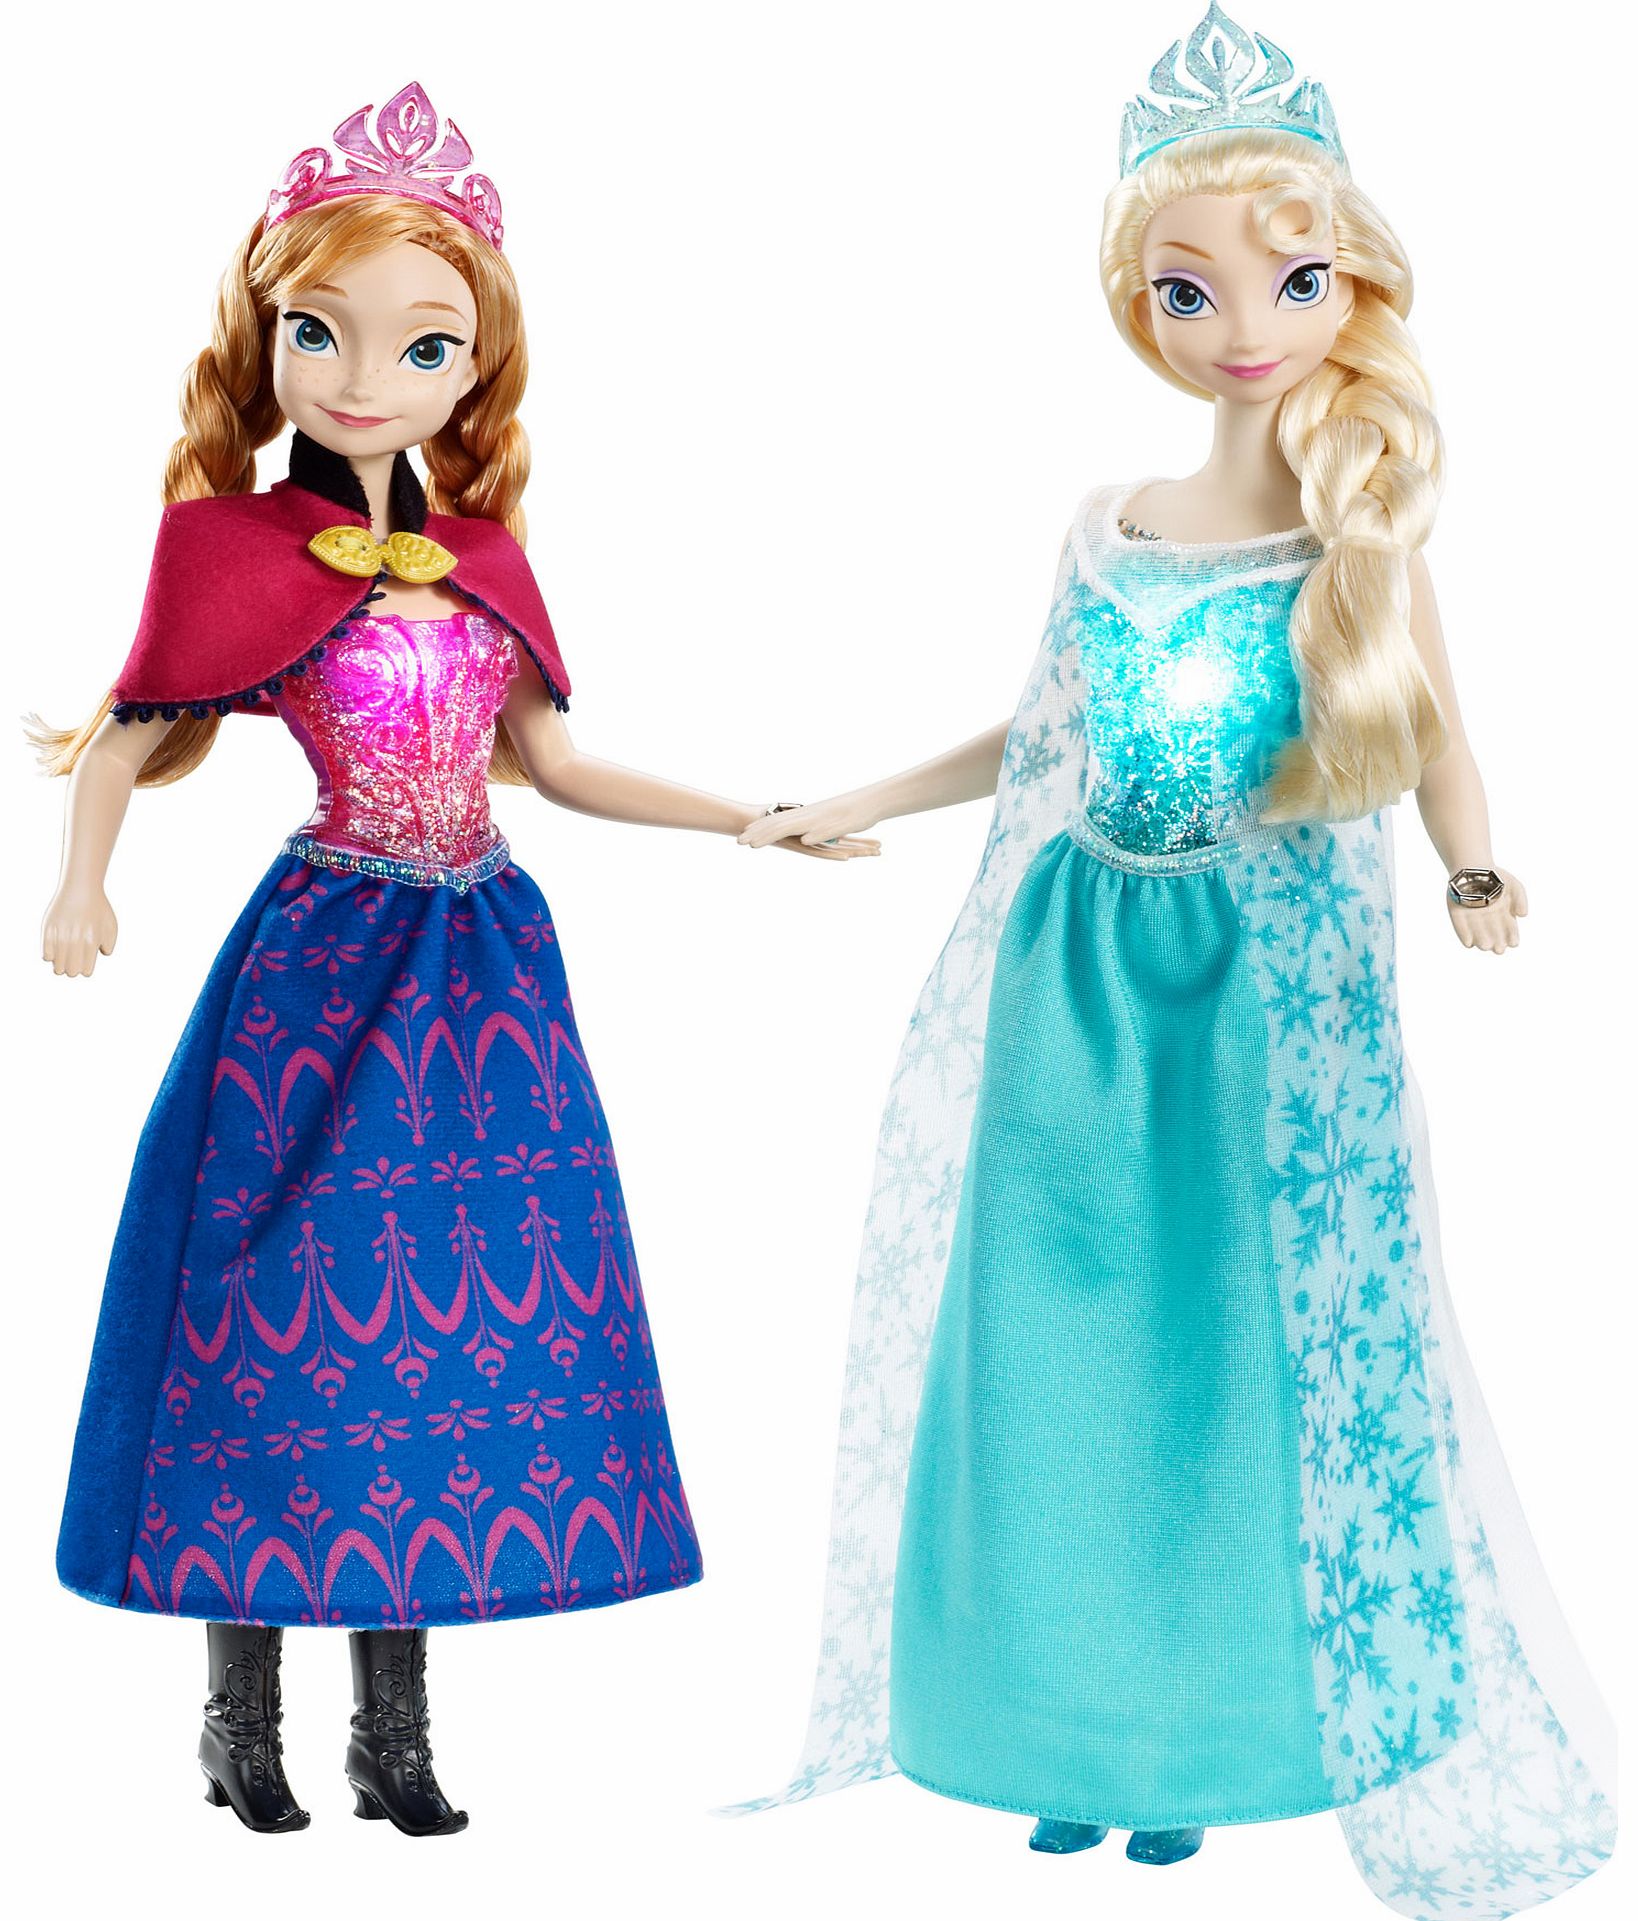 Frozen Feature Fashion Doll Assortment